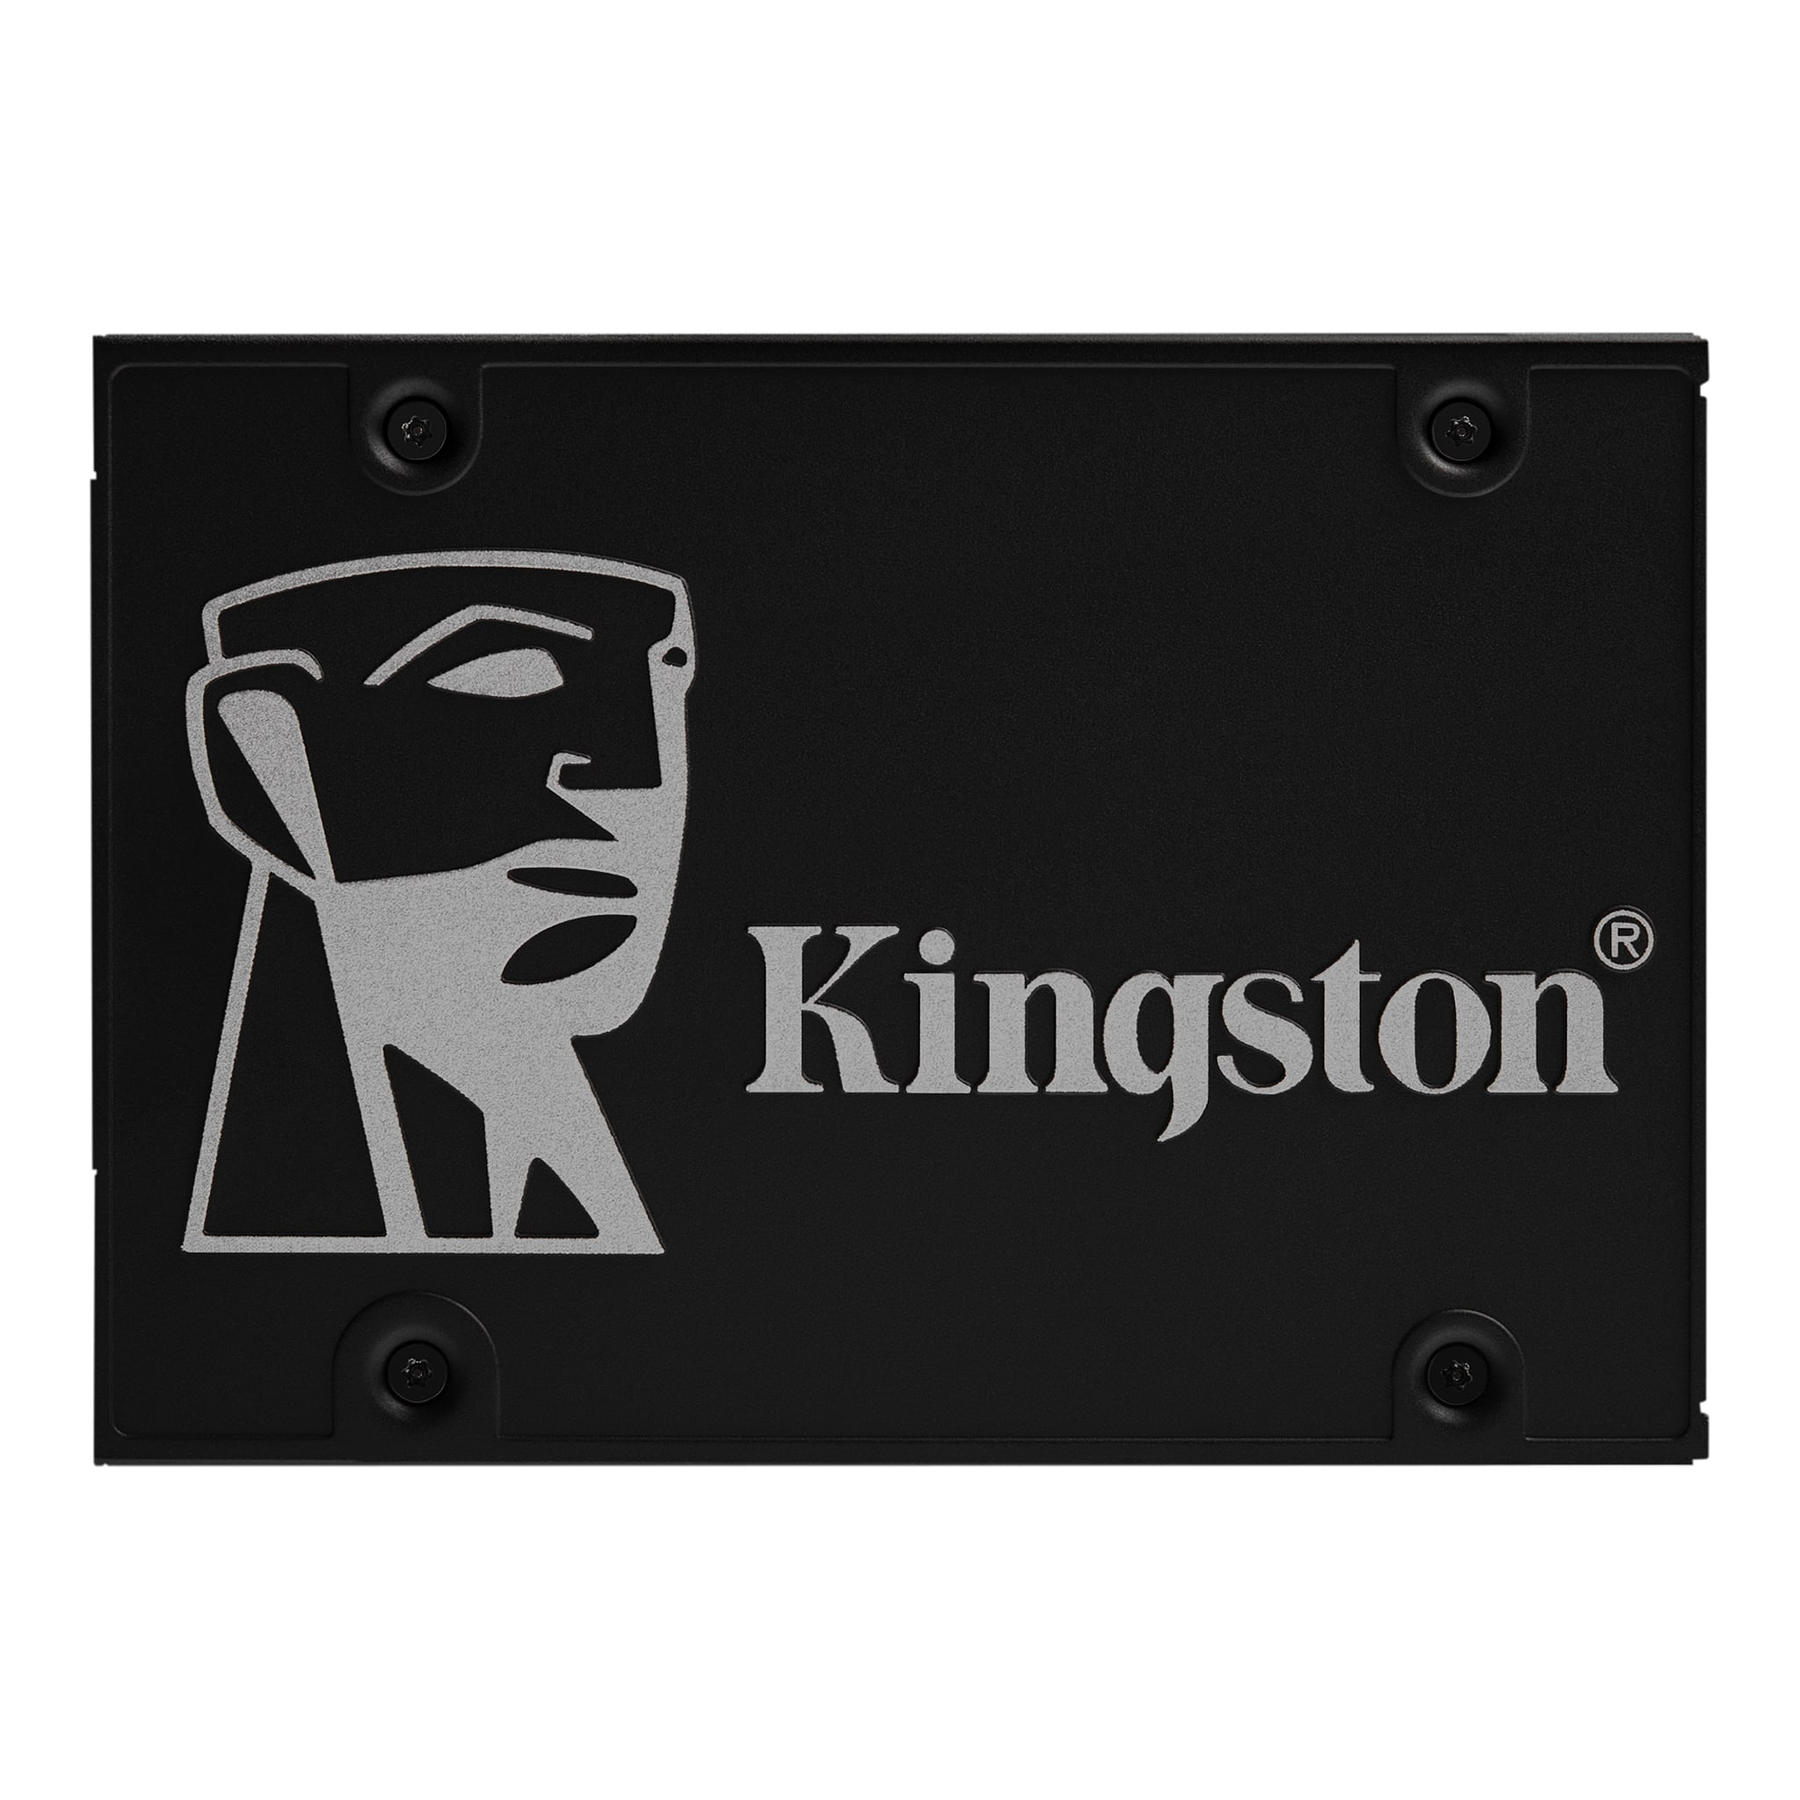 Kingston SKC600 1 TB 2.5